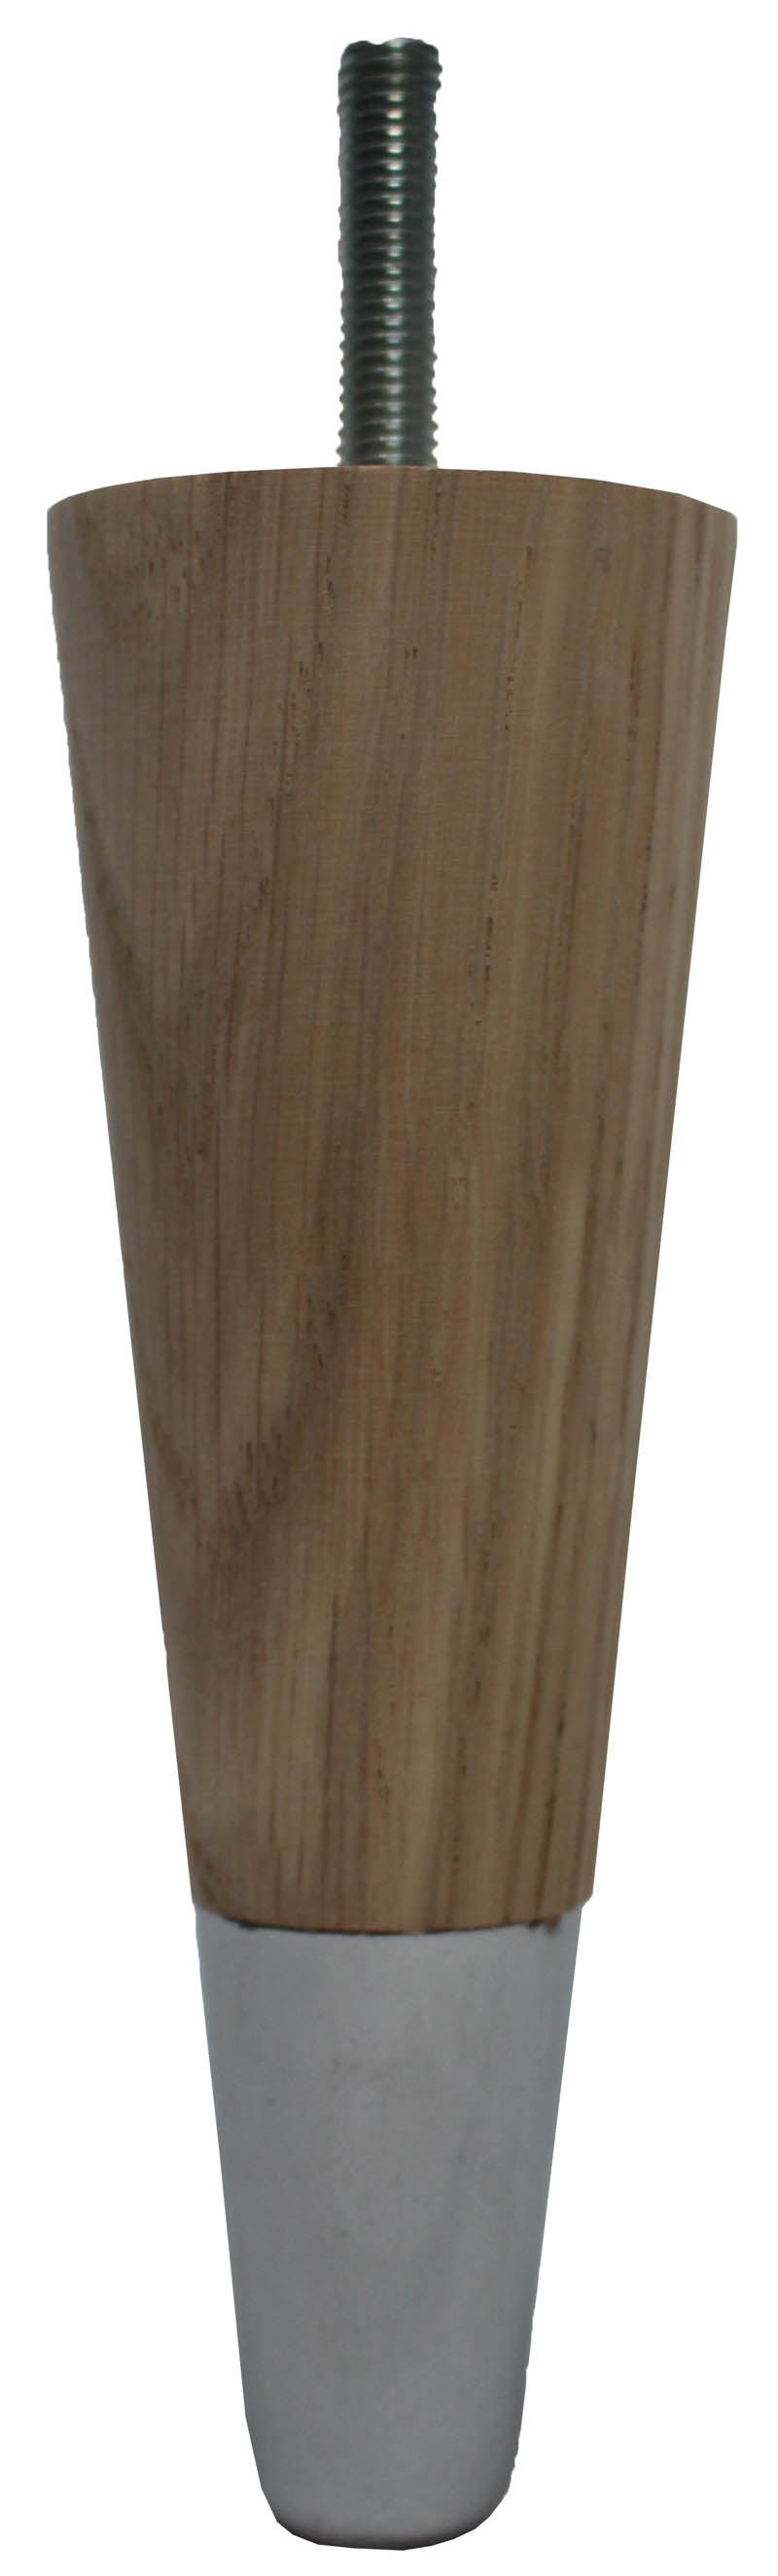 Heather Solid Oak Tapered Furniture Legs - Raw Finish - Chrome Slipper Cups - Set of 4